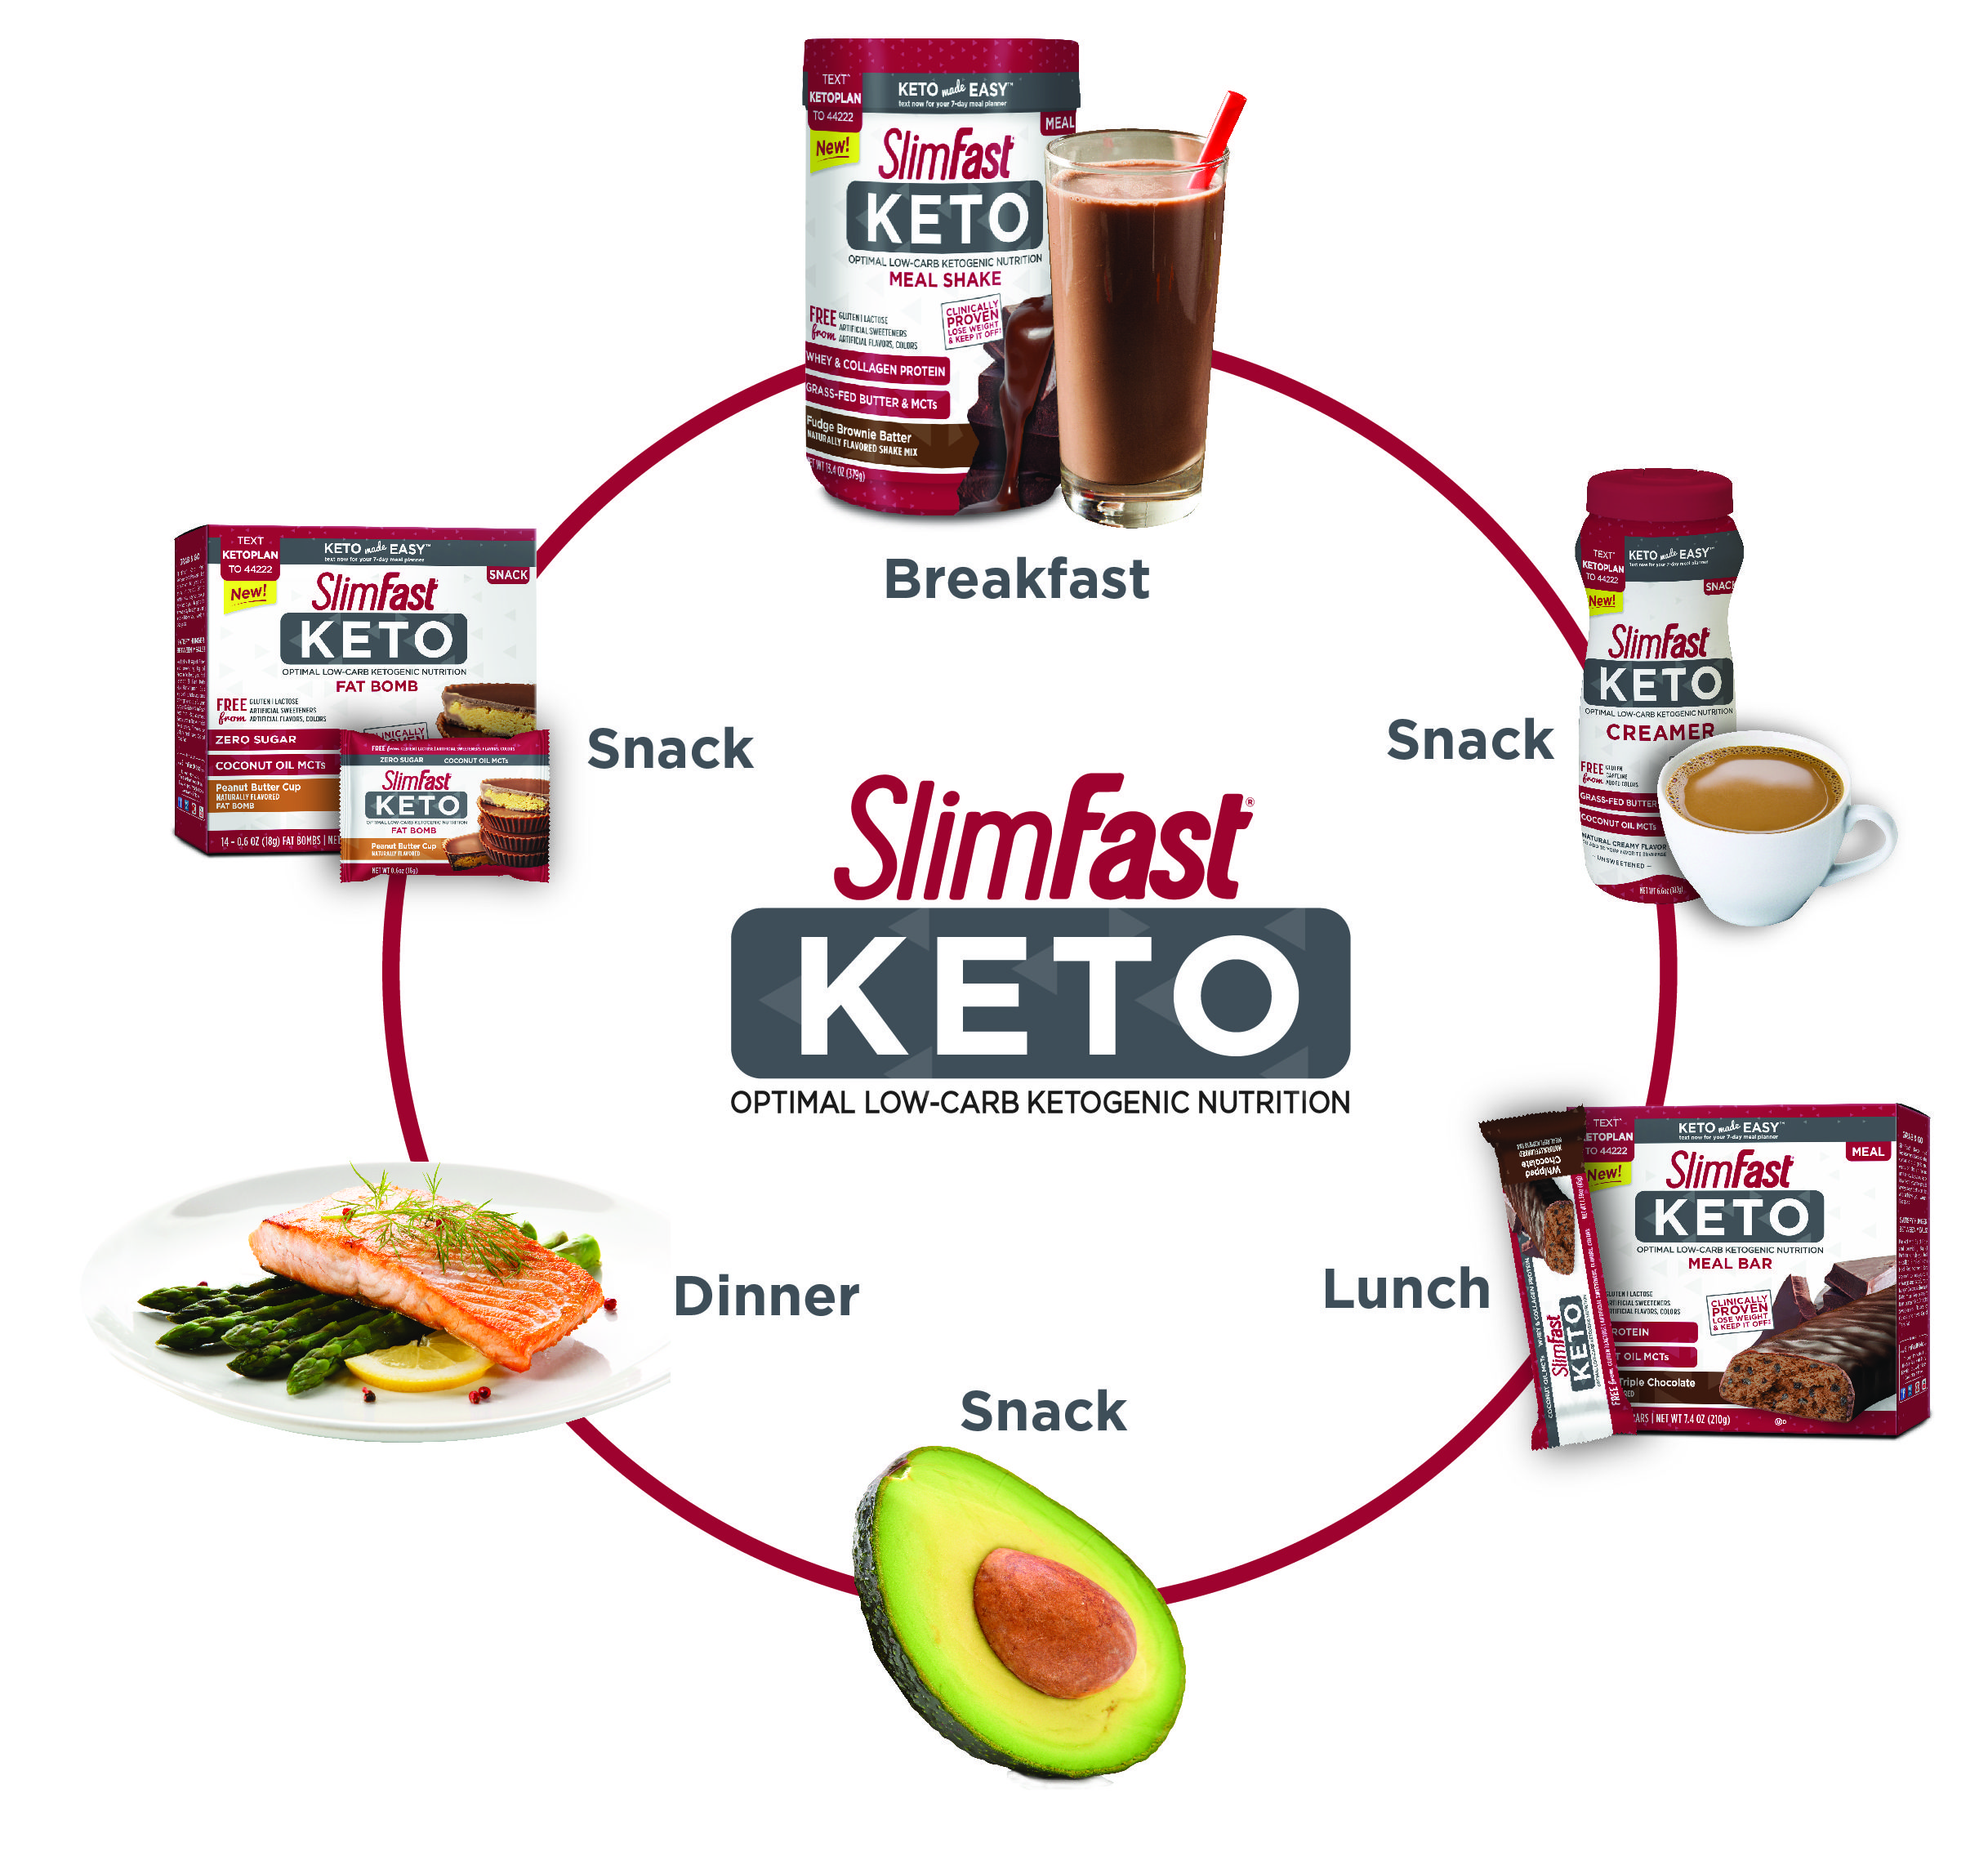 how does slim fast keto work